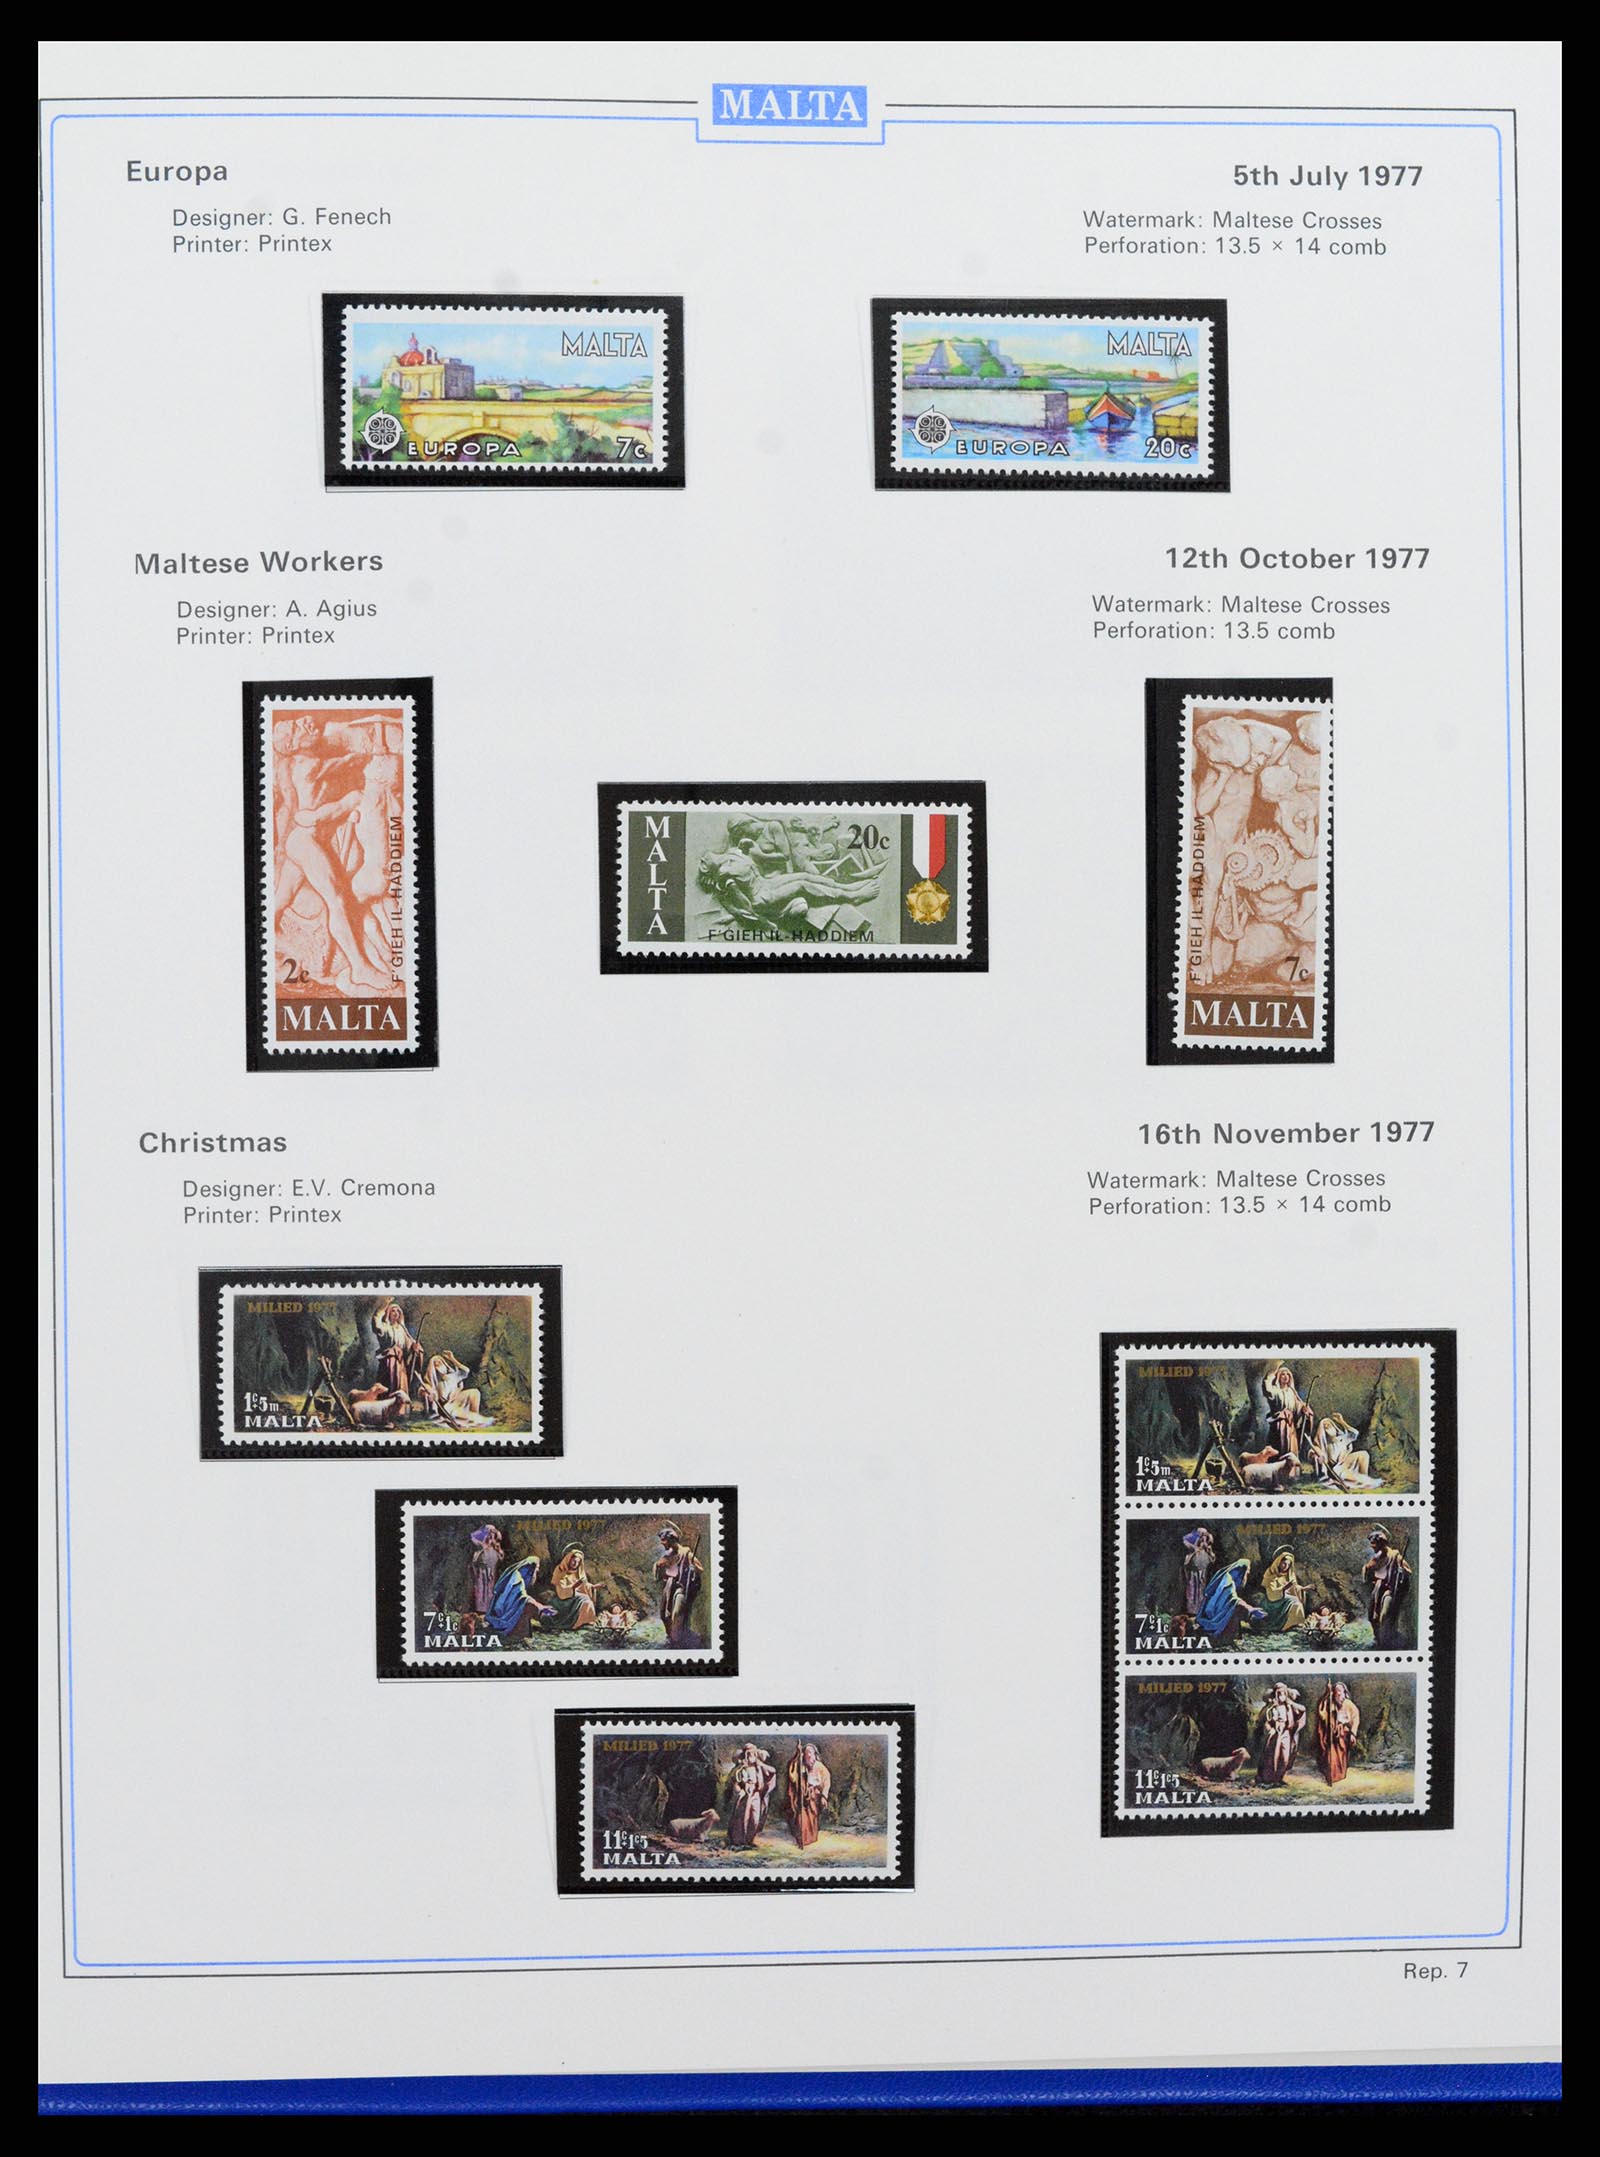 37374 055 - Stamp collection 37374 Malta 1885-2012.